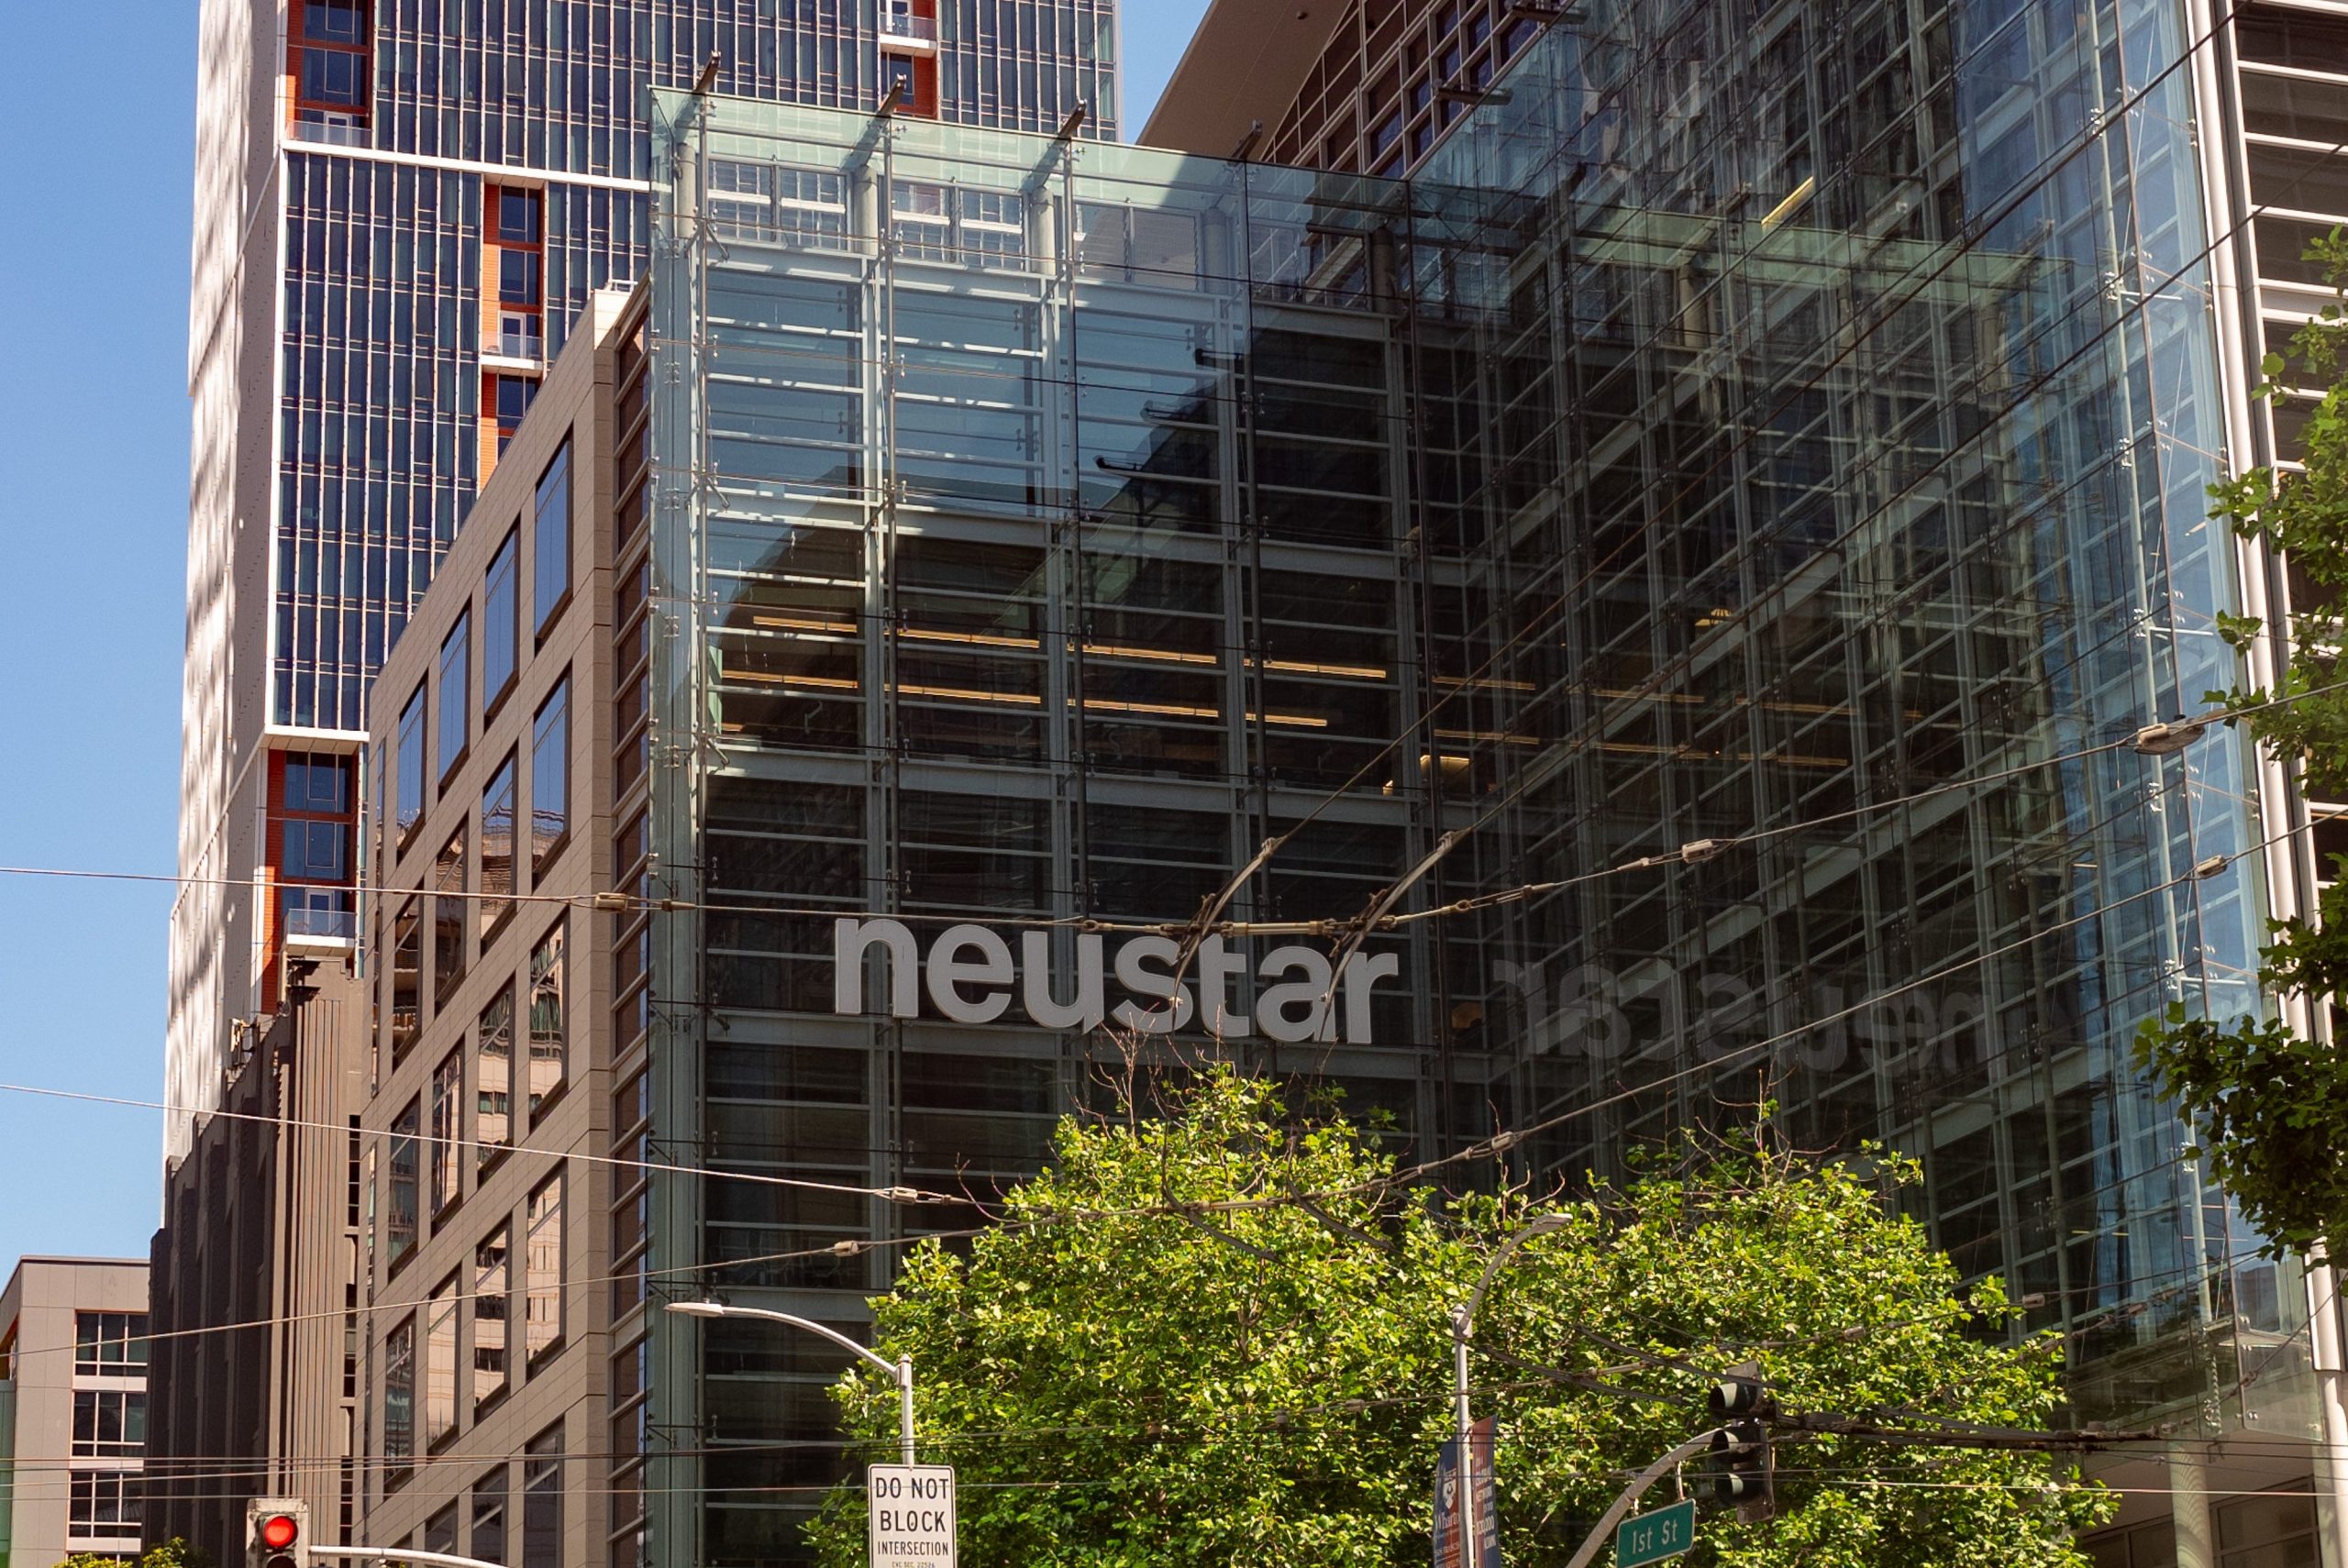 Neustar building